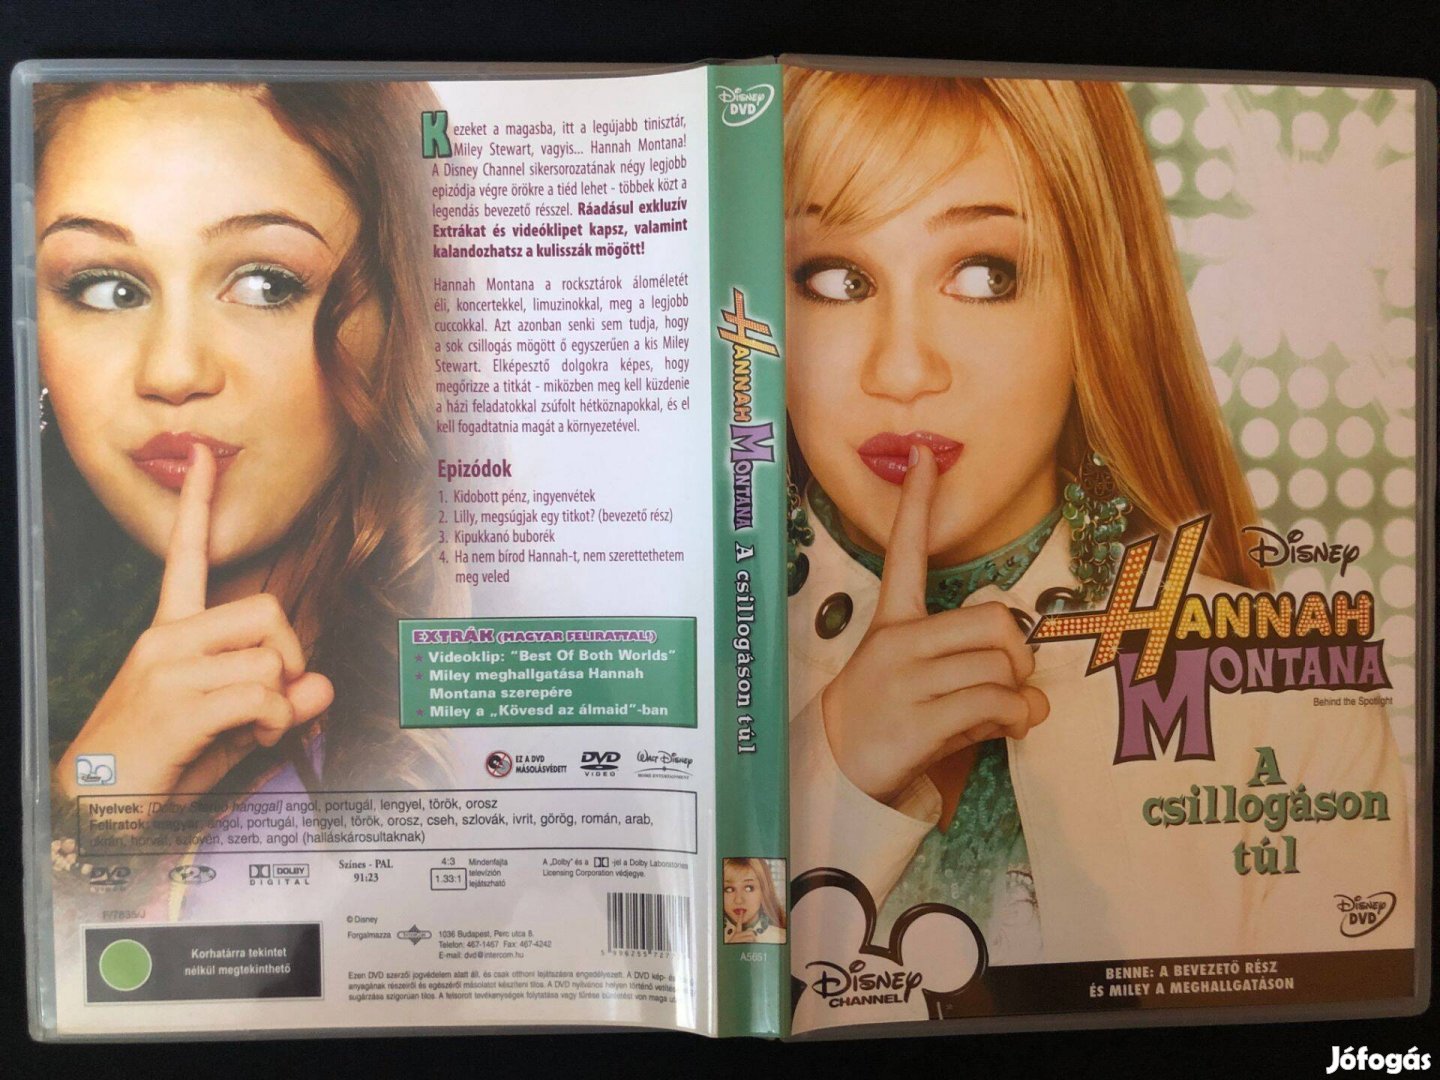 Hannah Montana A csillogáson túl (karcmentes) DVD